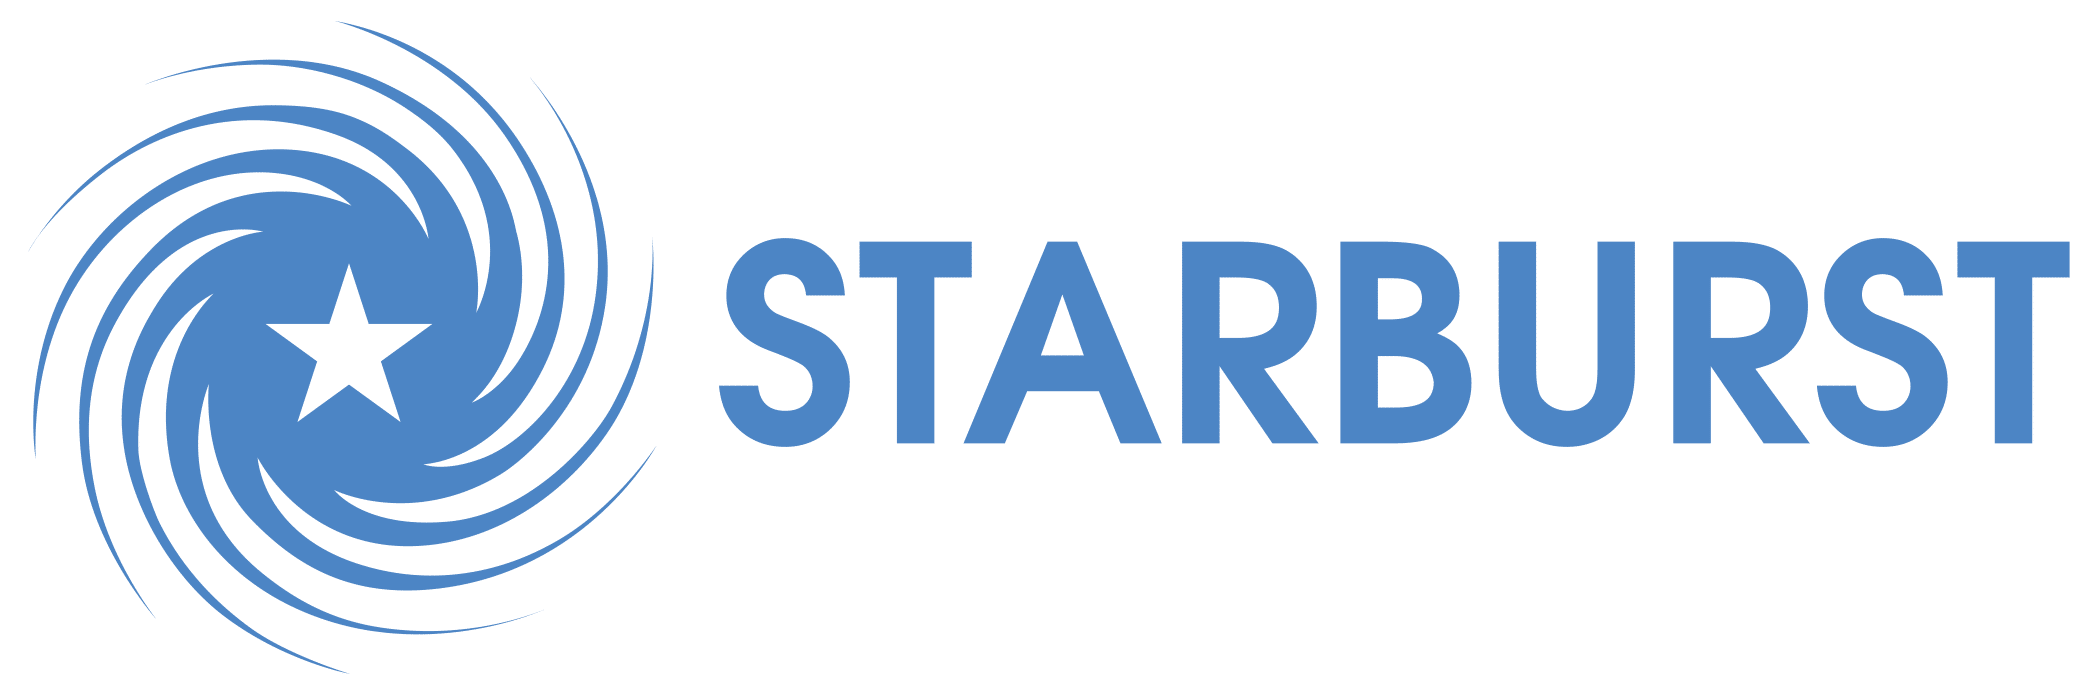 Starburst-Simple-Logo-only.png